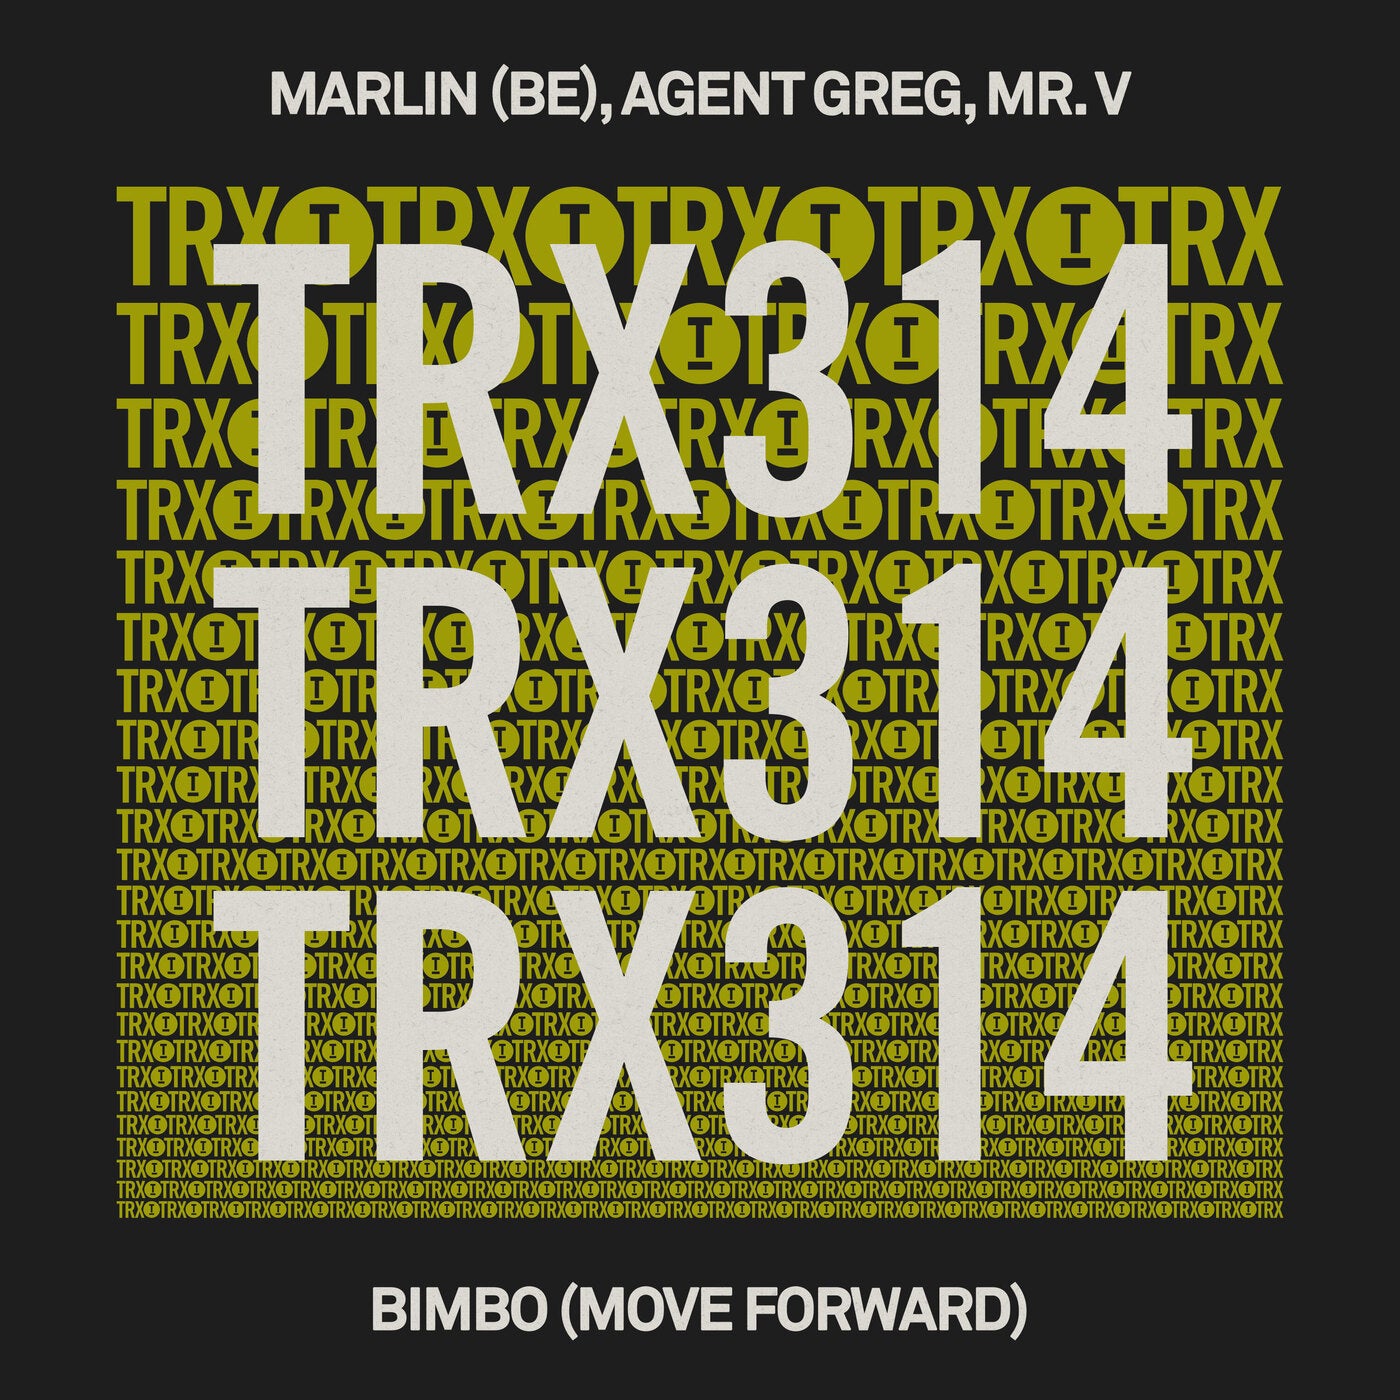 image cover: Mr. V, Agent Greg, Marlin (BE) - Bimbo (Move Forward) on Toolroom Trax